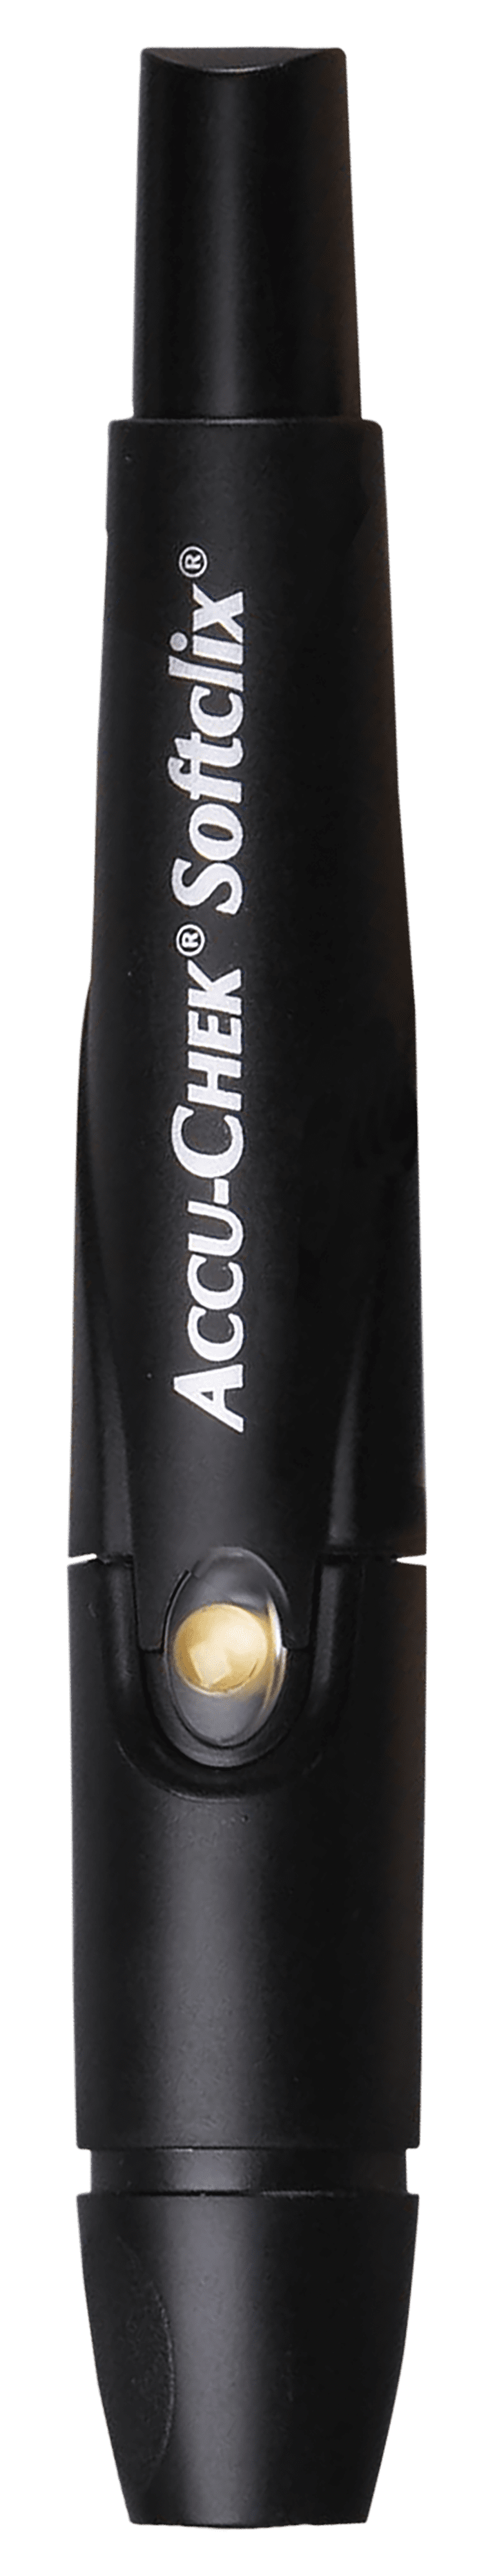 Accu-Chek® Softclix lancing device